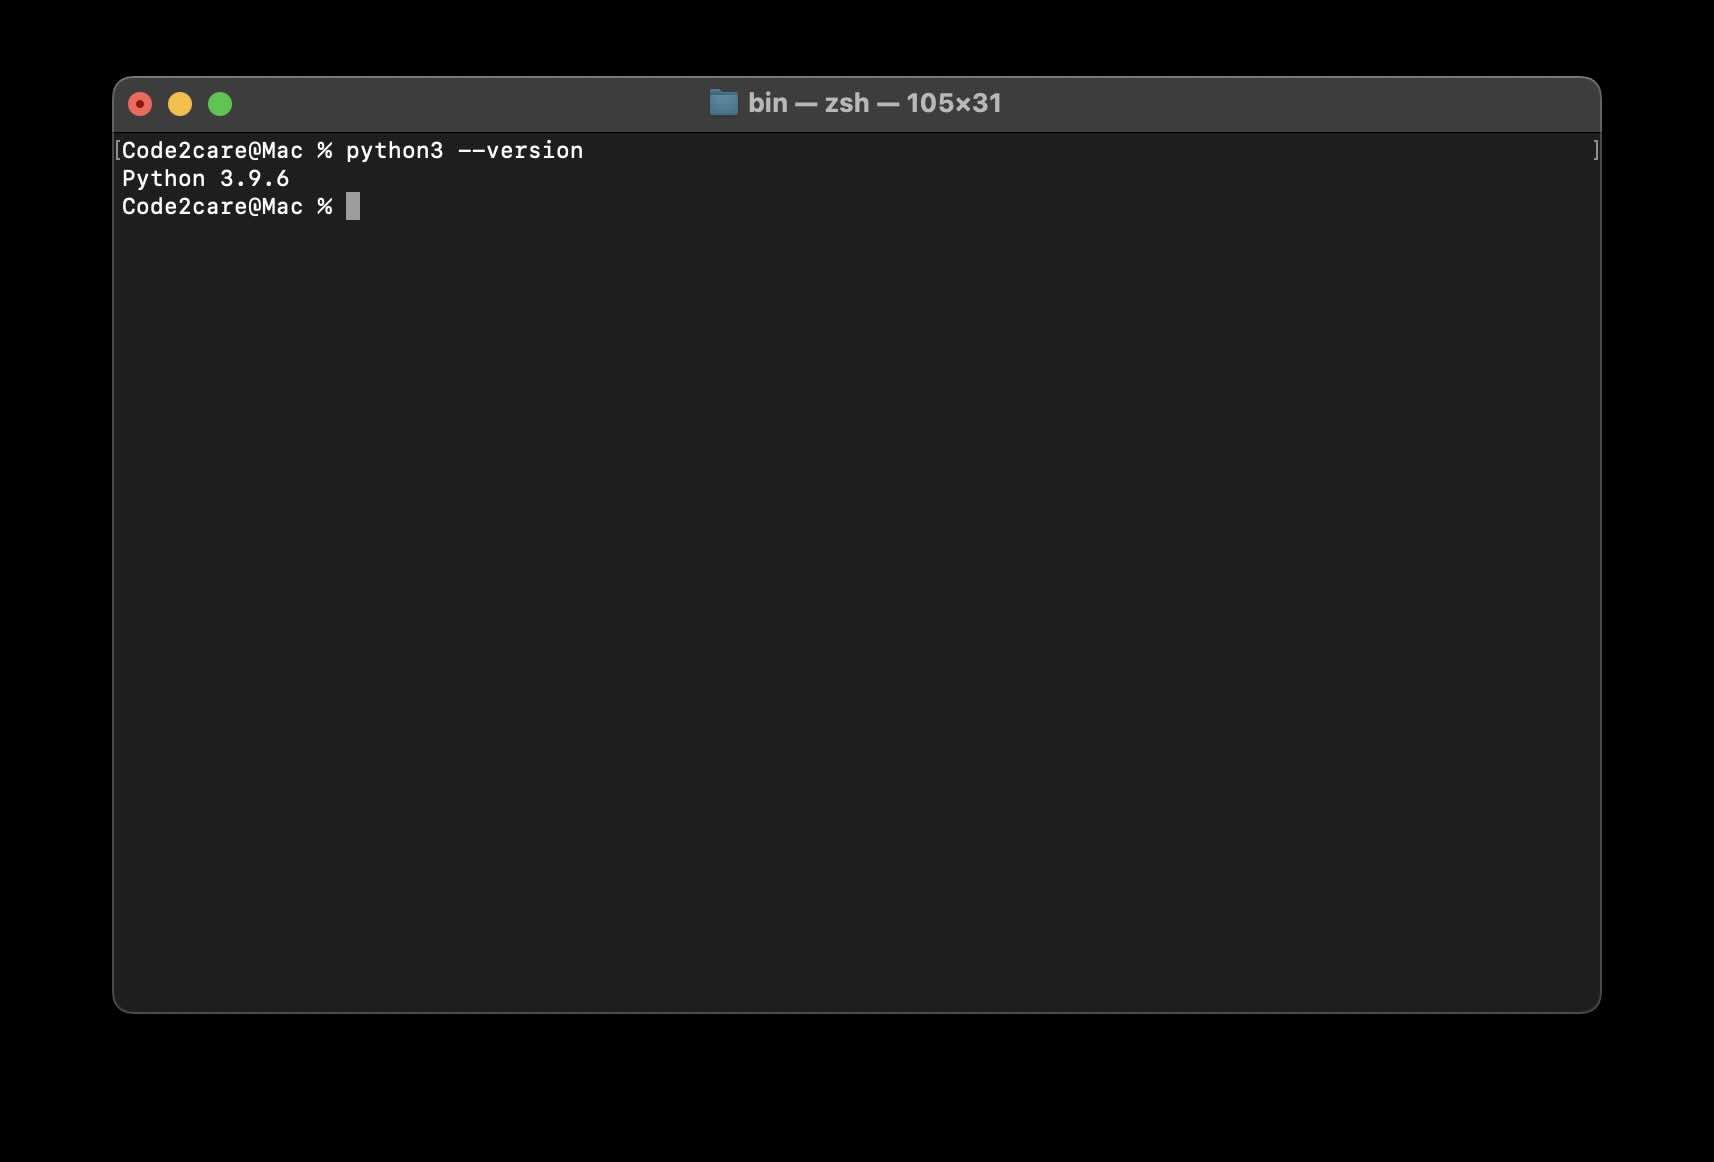 Python 3.9.6 is default on macOS Sonoma